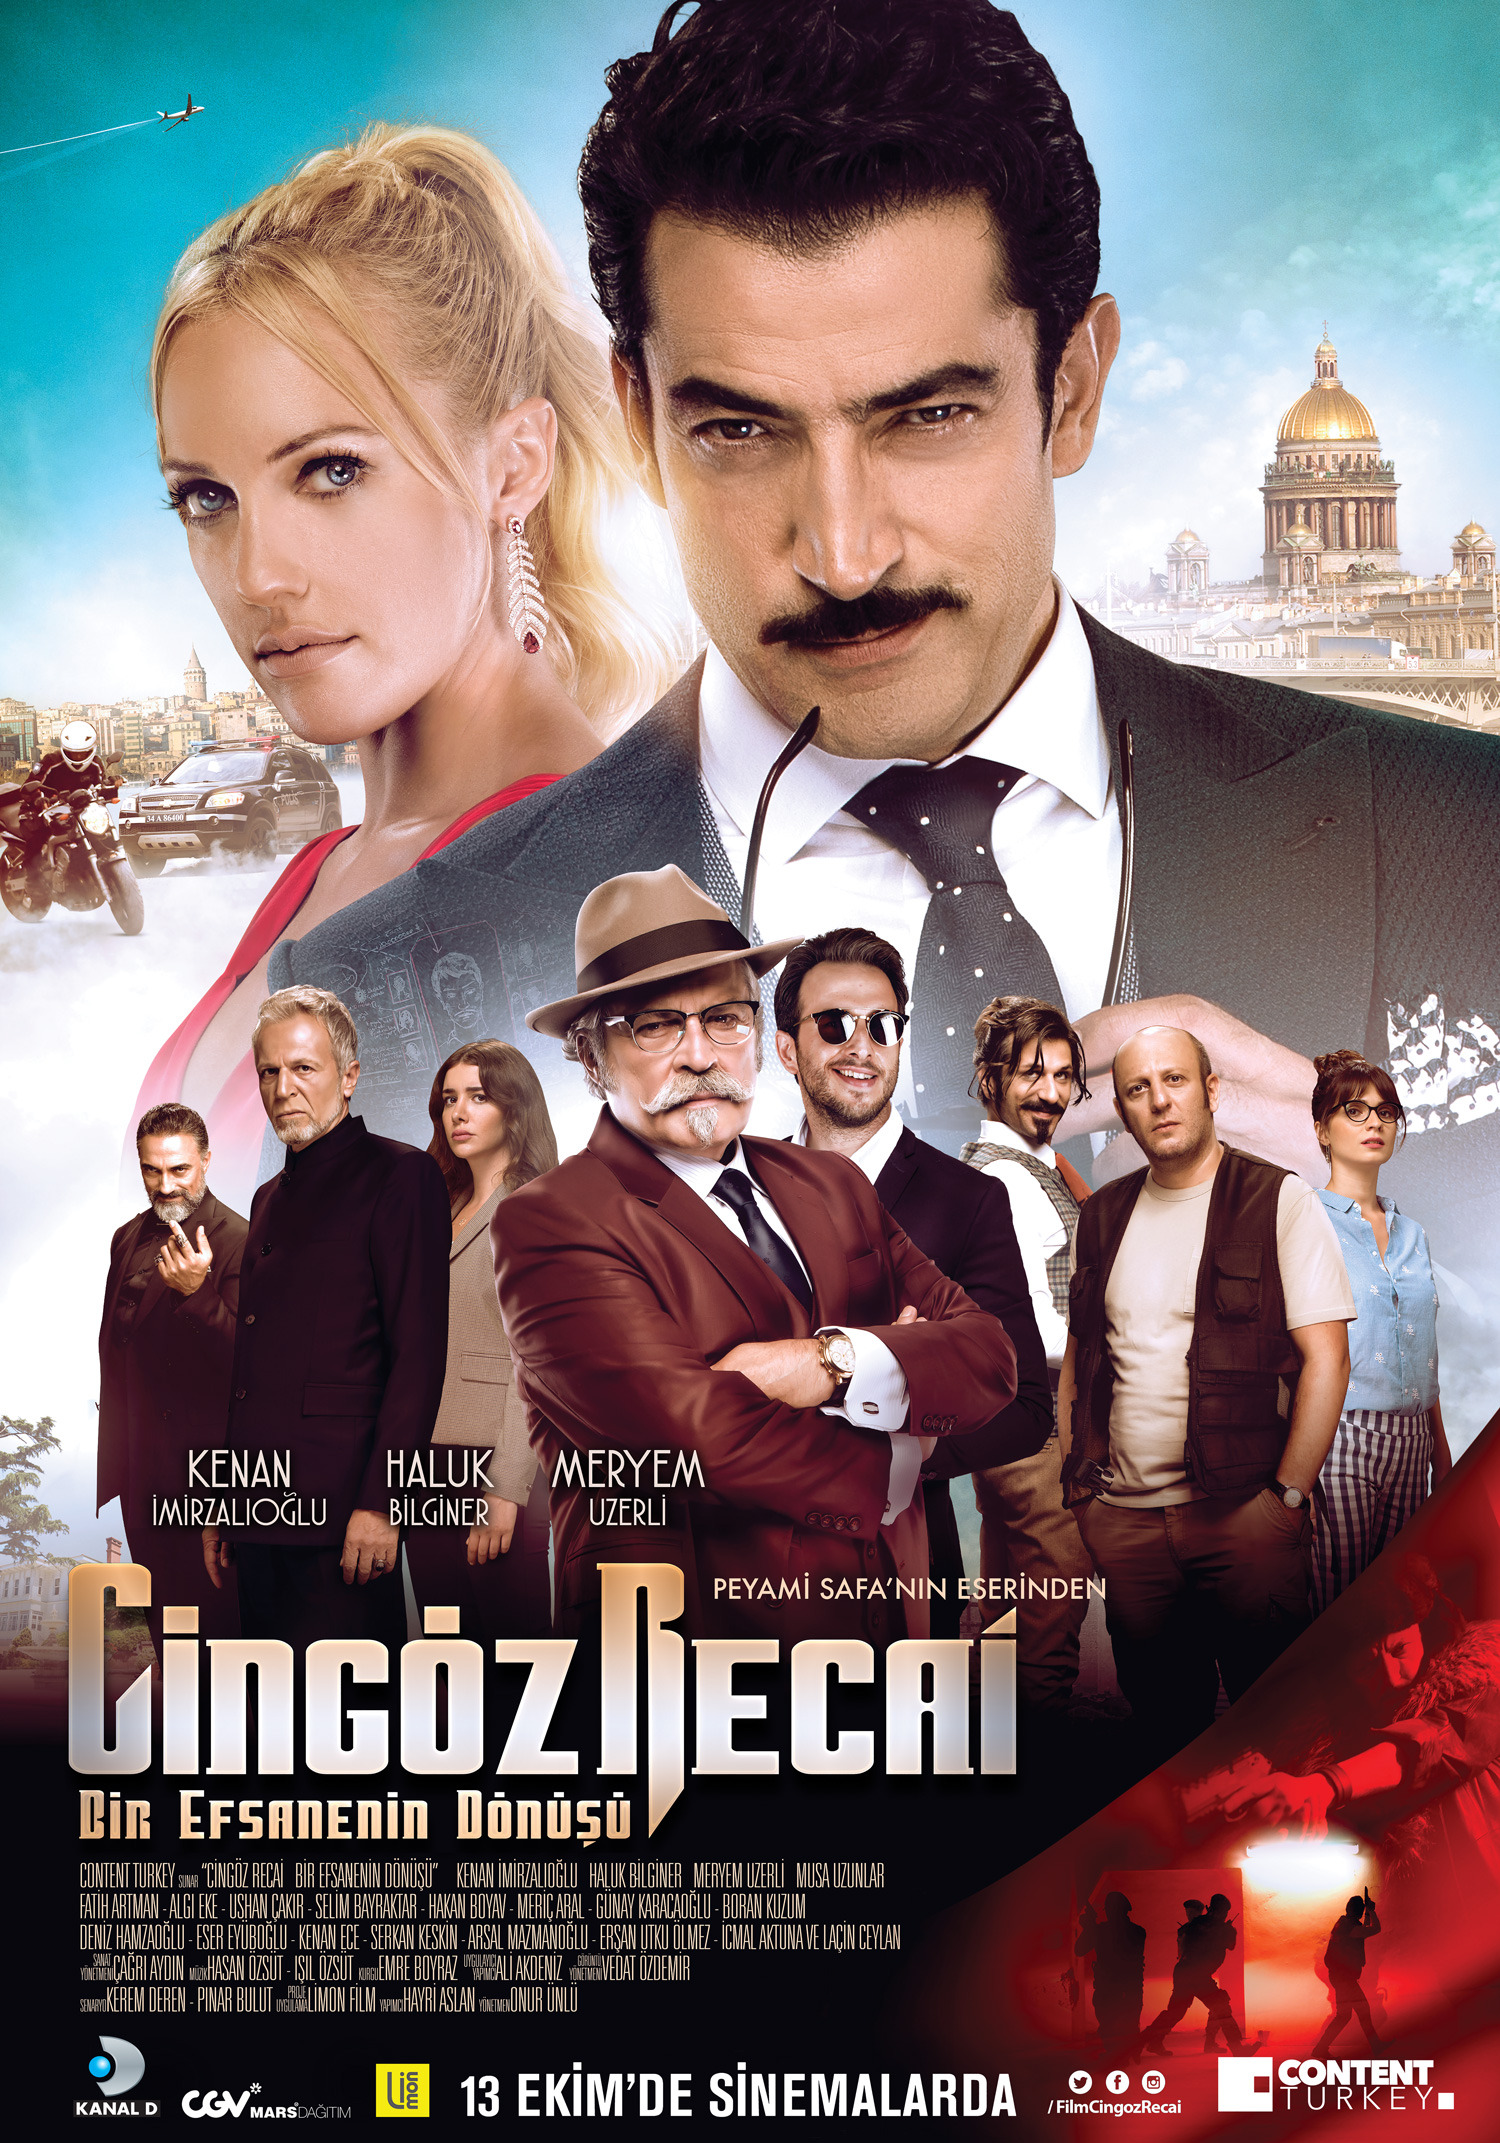 Mega Sized Movie Poster Image for Cingöz Recai (#1 of 11)